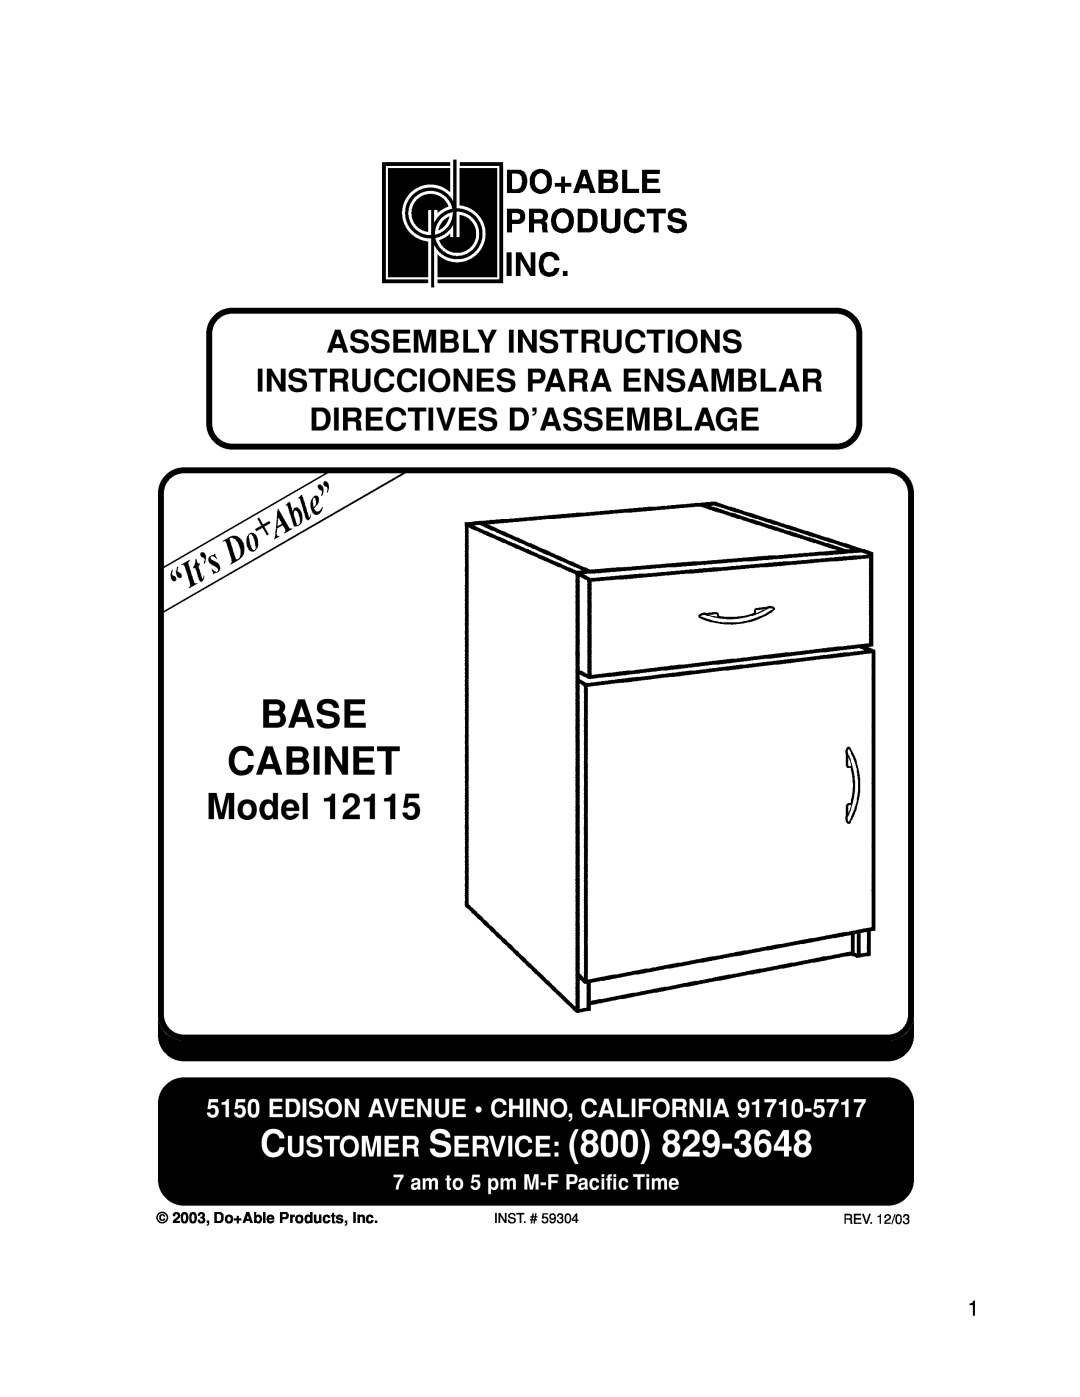 Closet Maid 12115 manual Model, Base Cabinet, Customer Service, Assembly Instructions, Edison Avenue Chino, California 